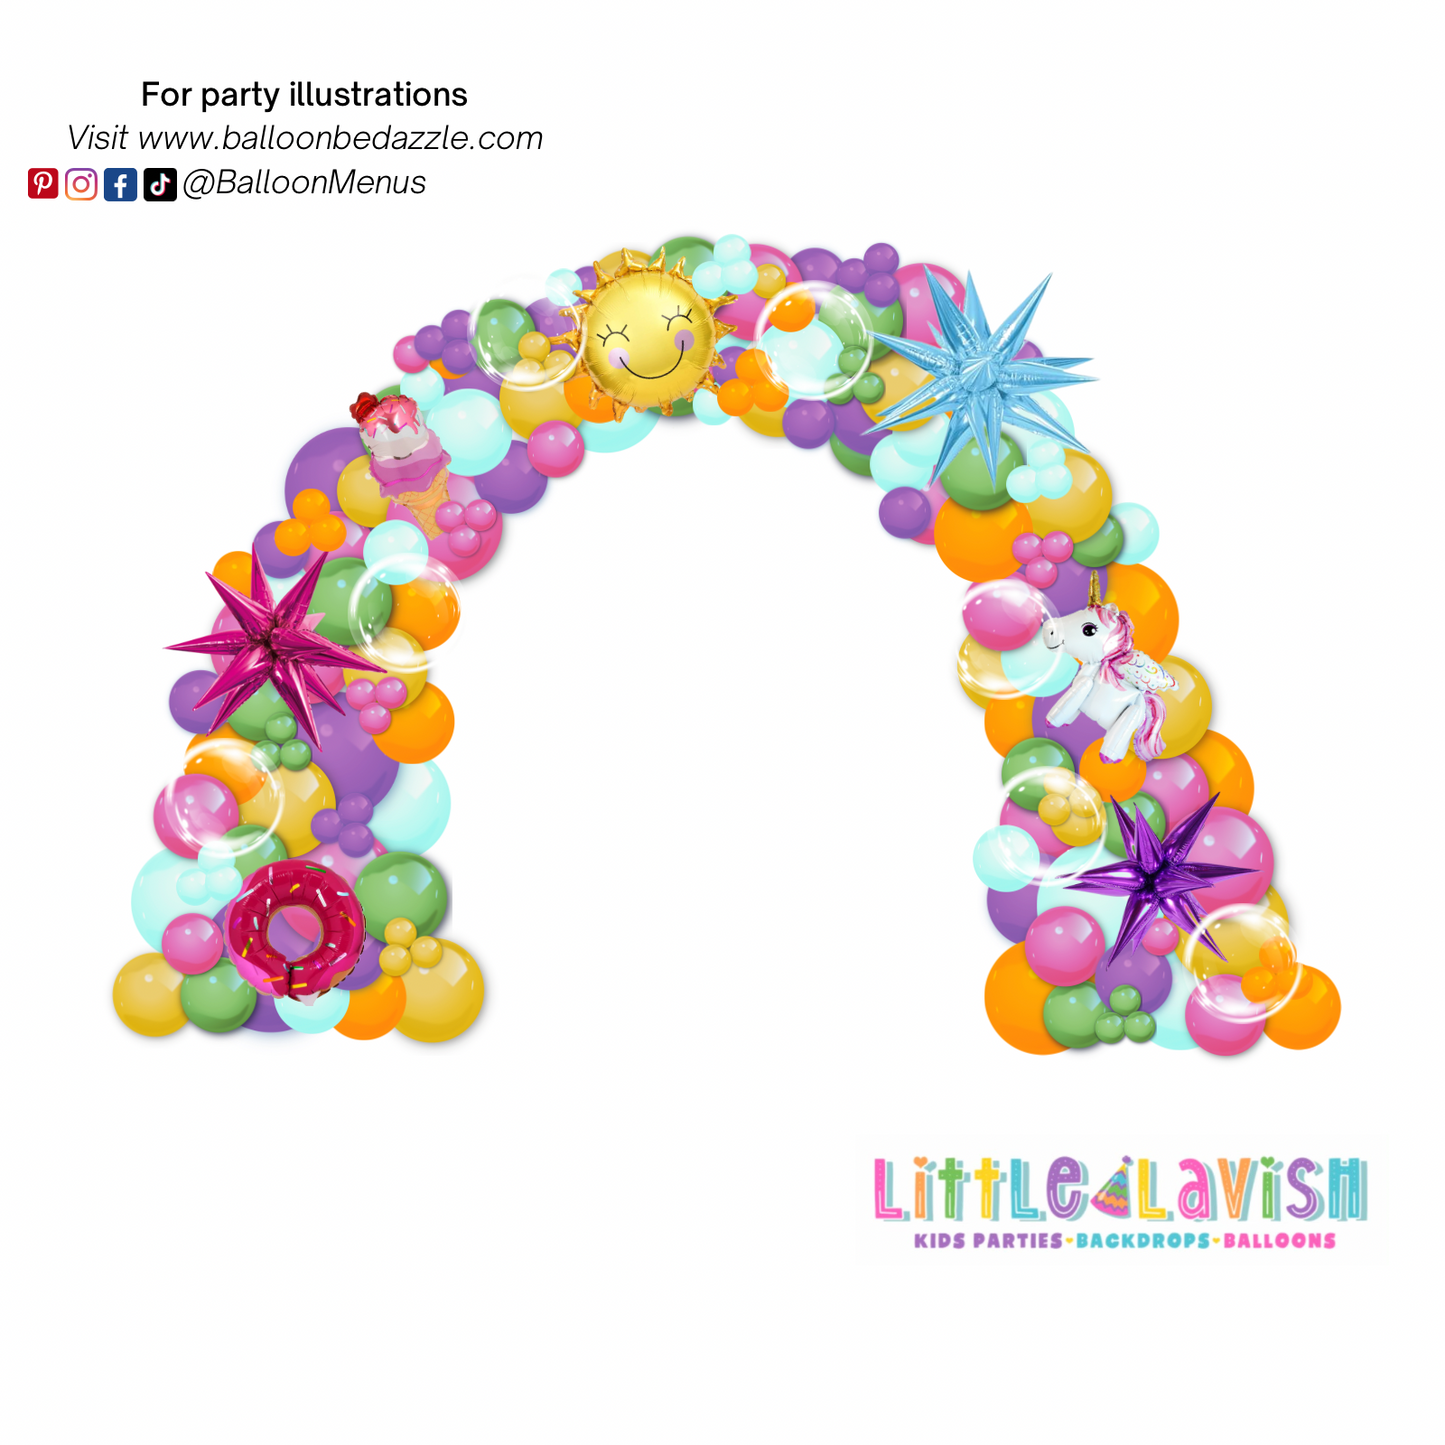 Little Lavish (Large Individual Party Illustrations)- Client Balloon Menu